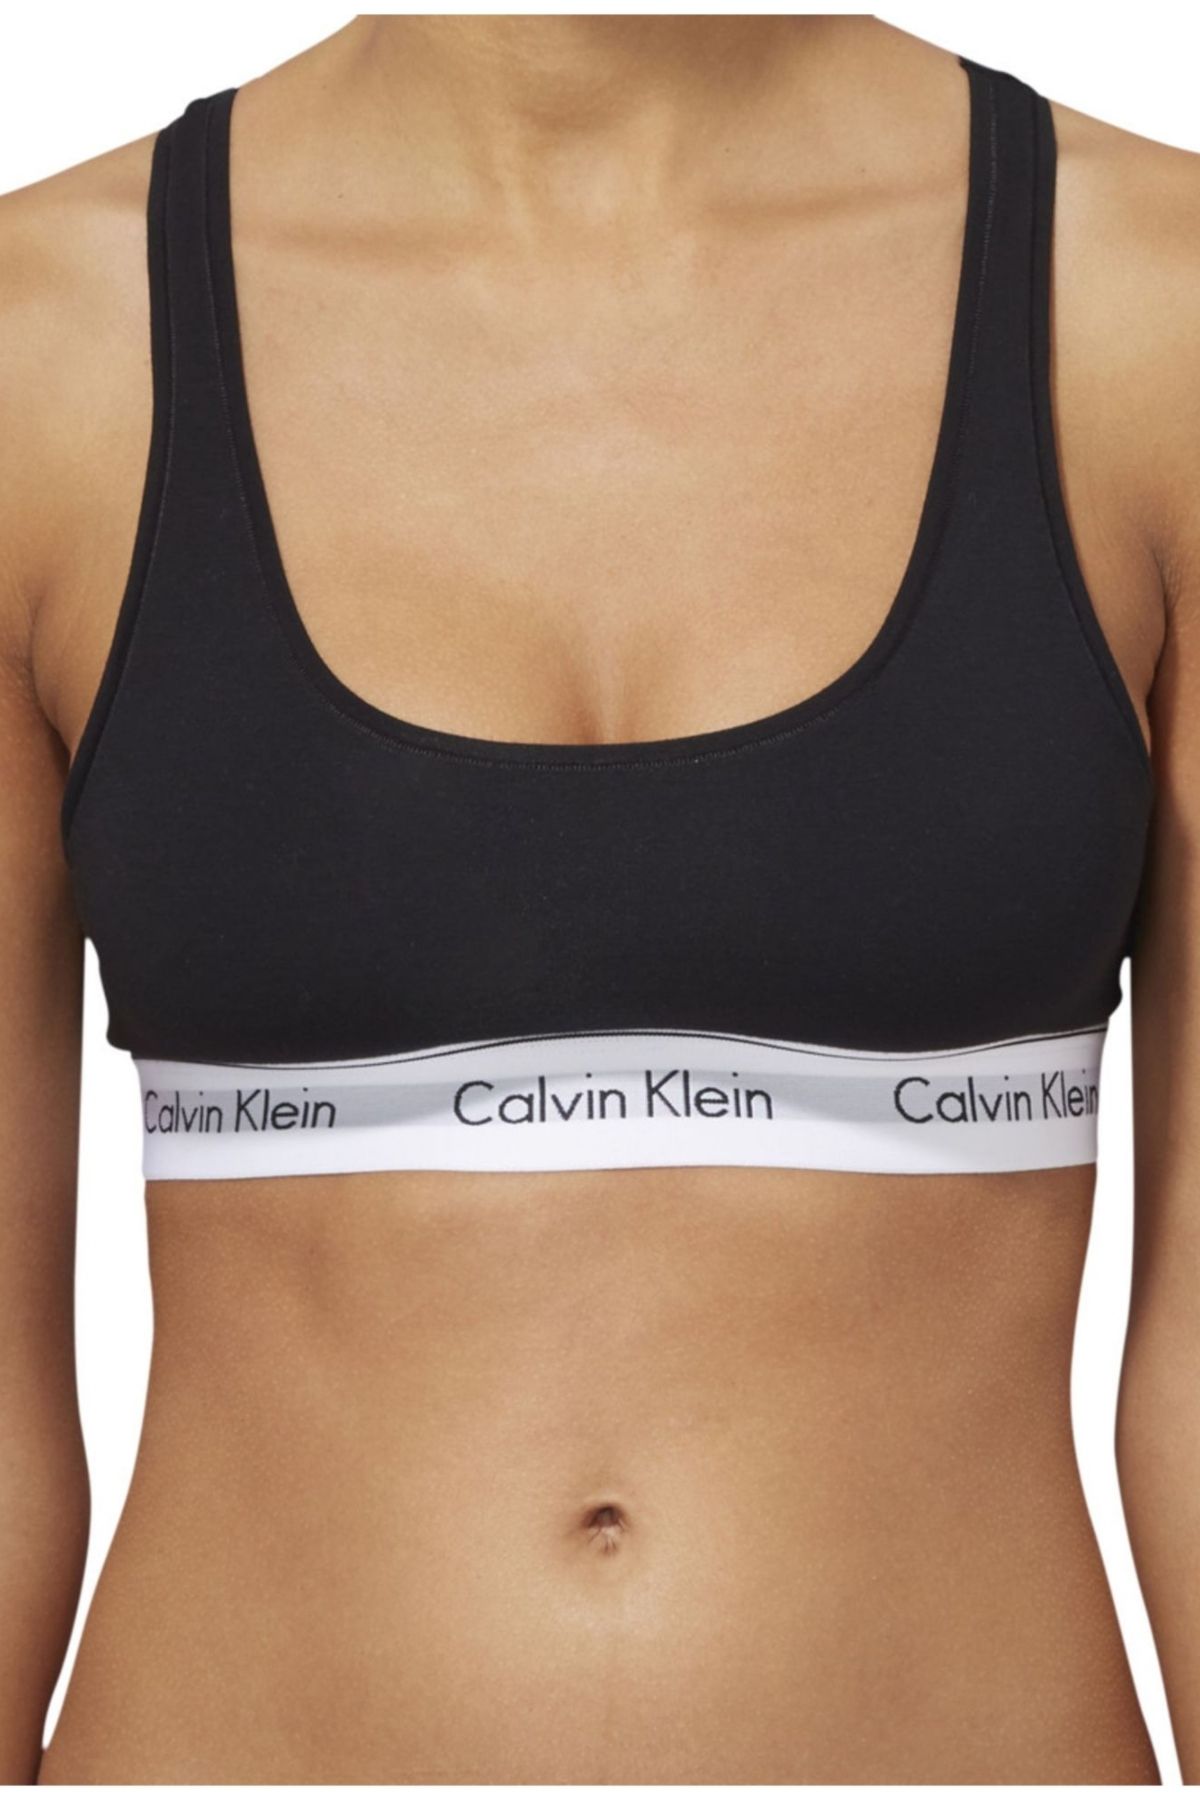 Calvin Klein Women's Modern Cotton Bralette, White, Large 